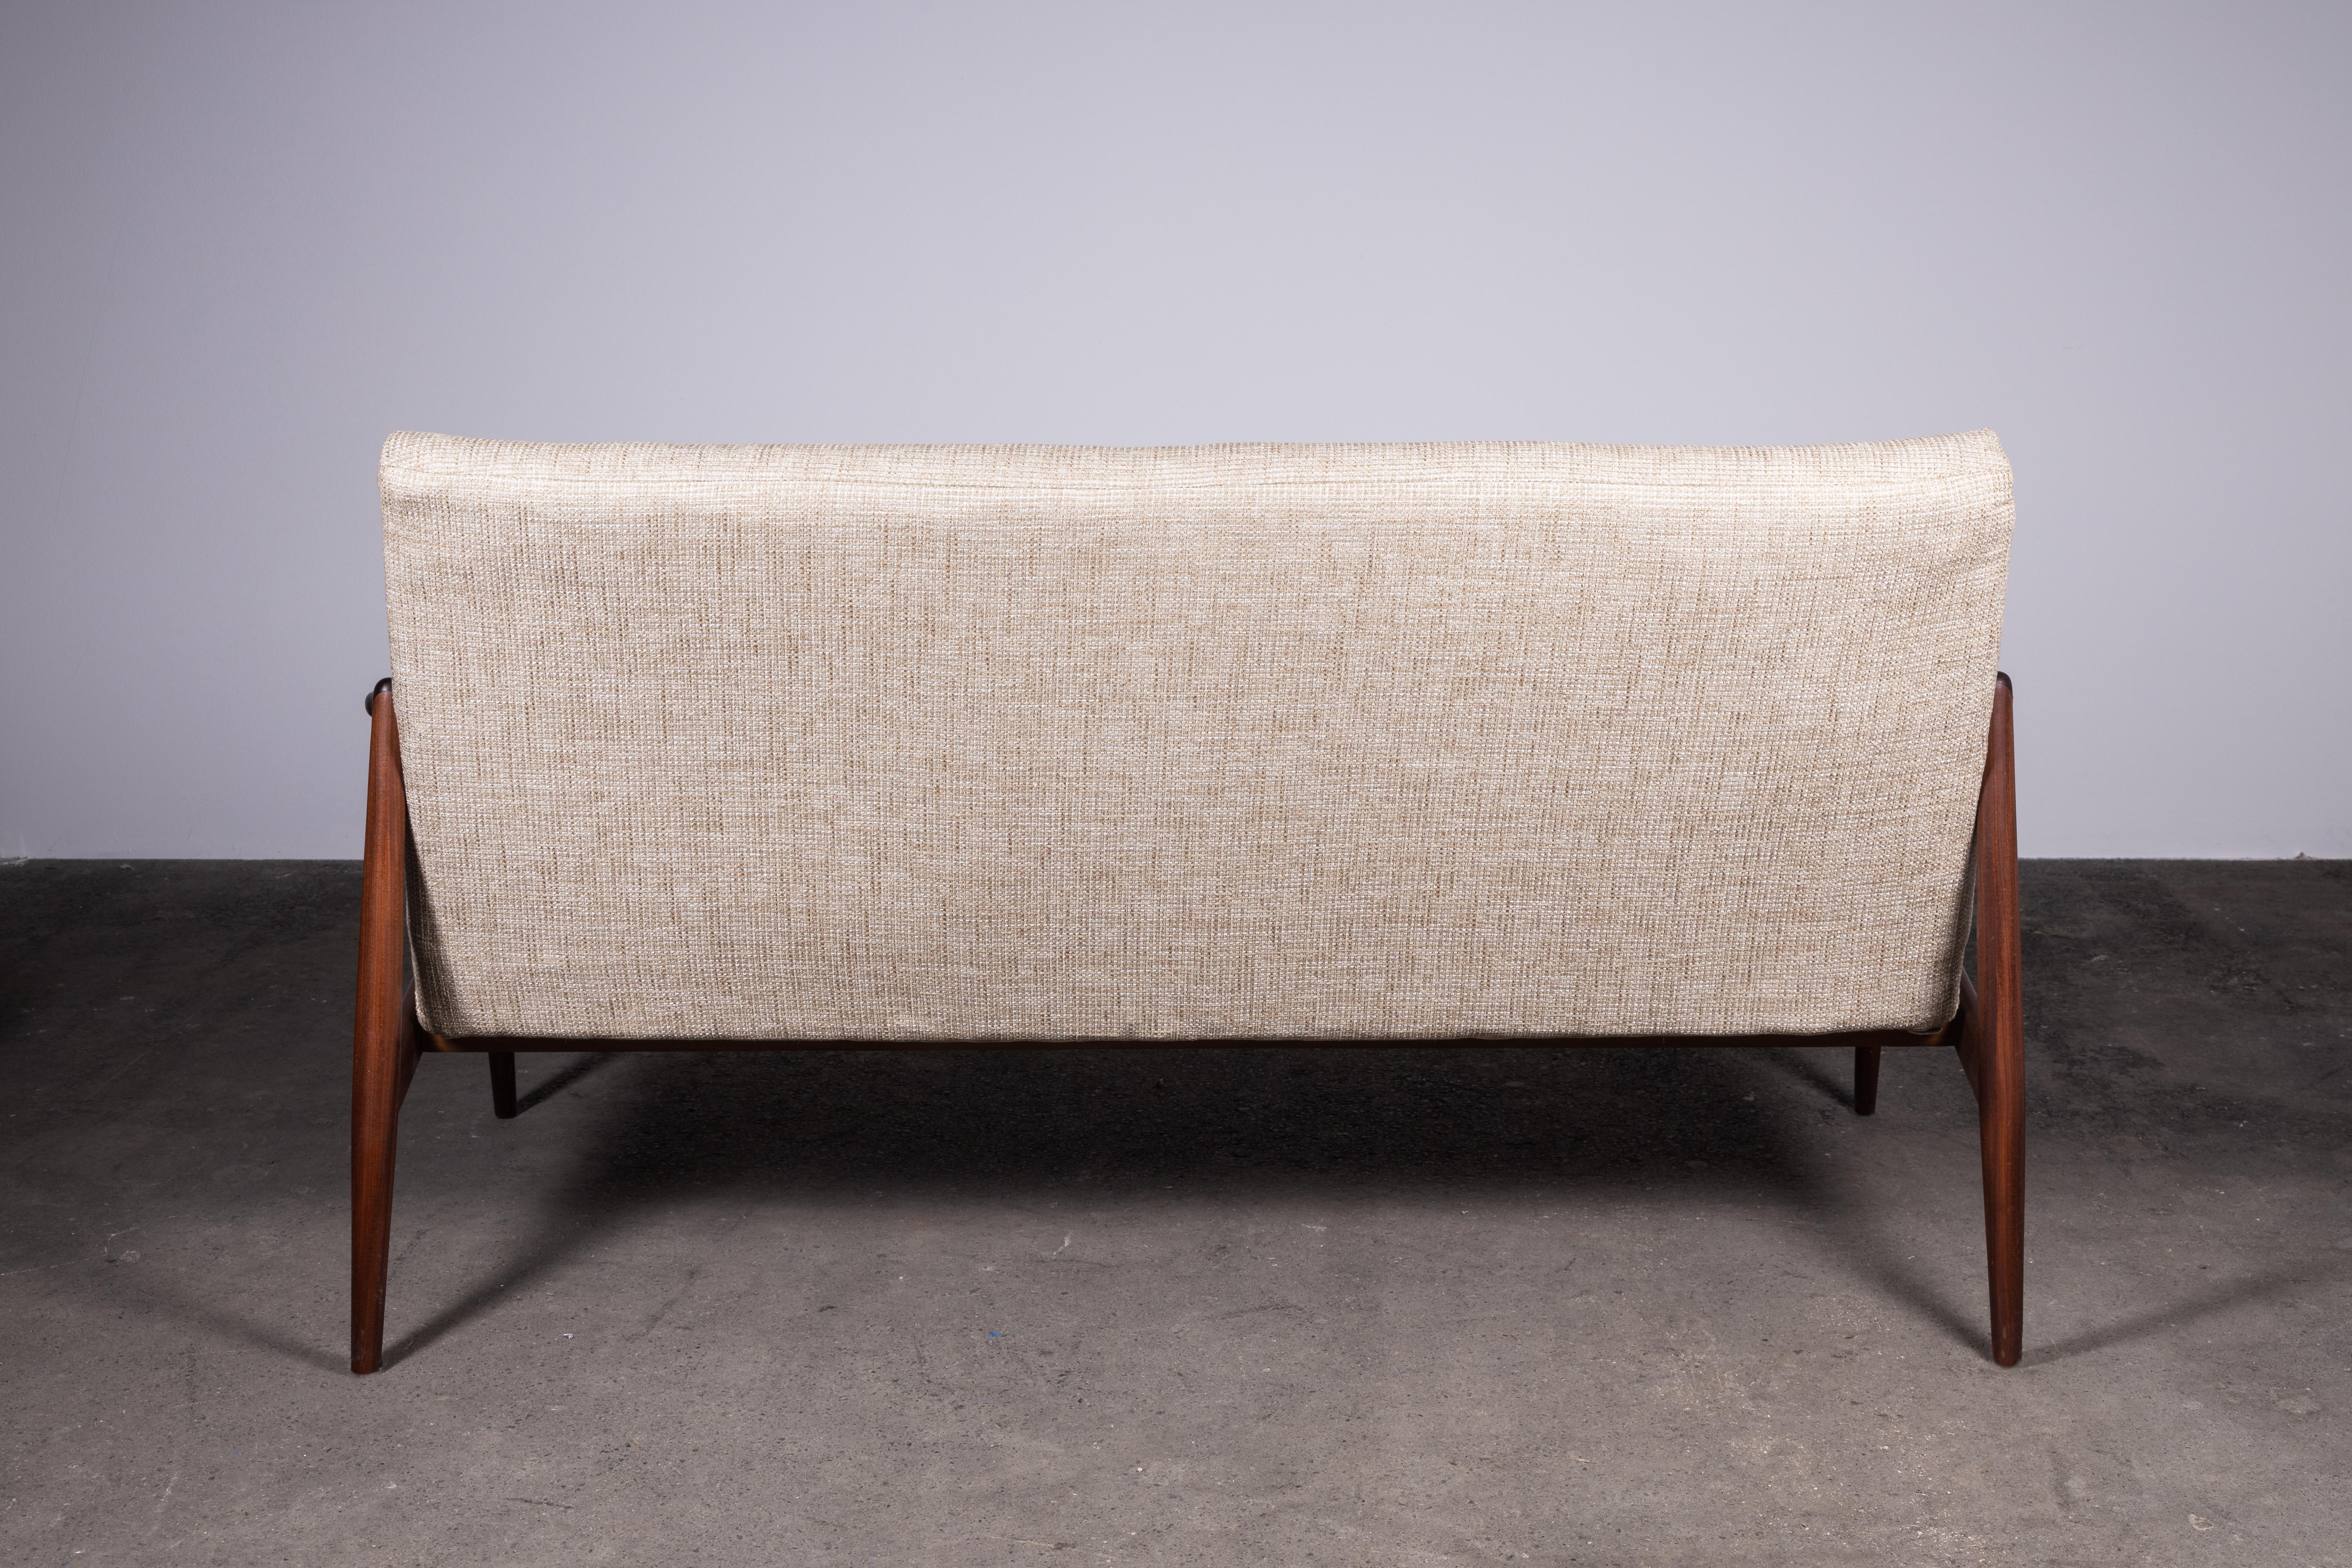 Organic Modern 1950s Teak Living Room Sofa Set by Lohmeyer Upholstered à la Coco Chanel For Sale